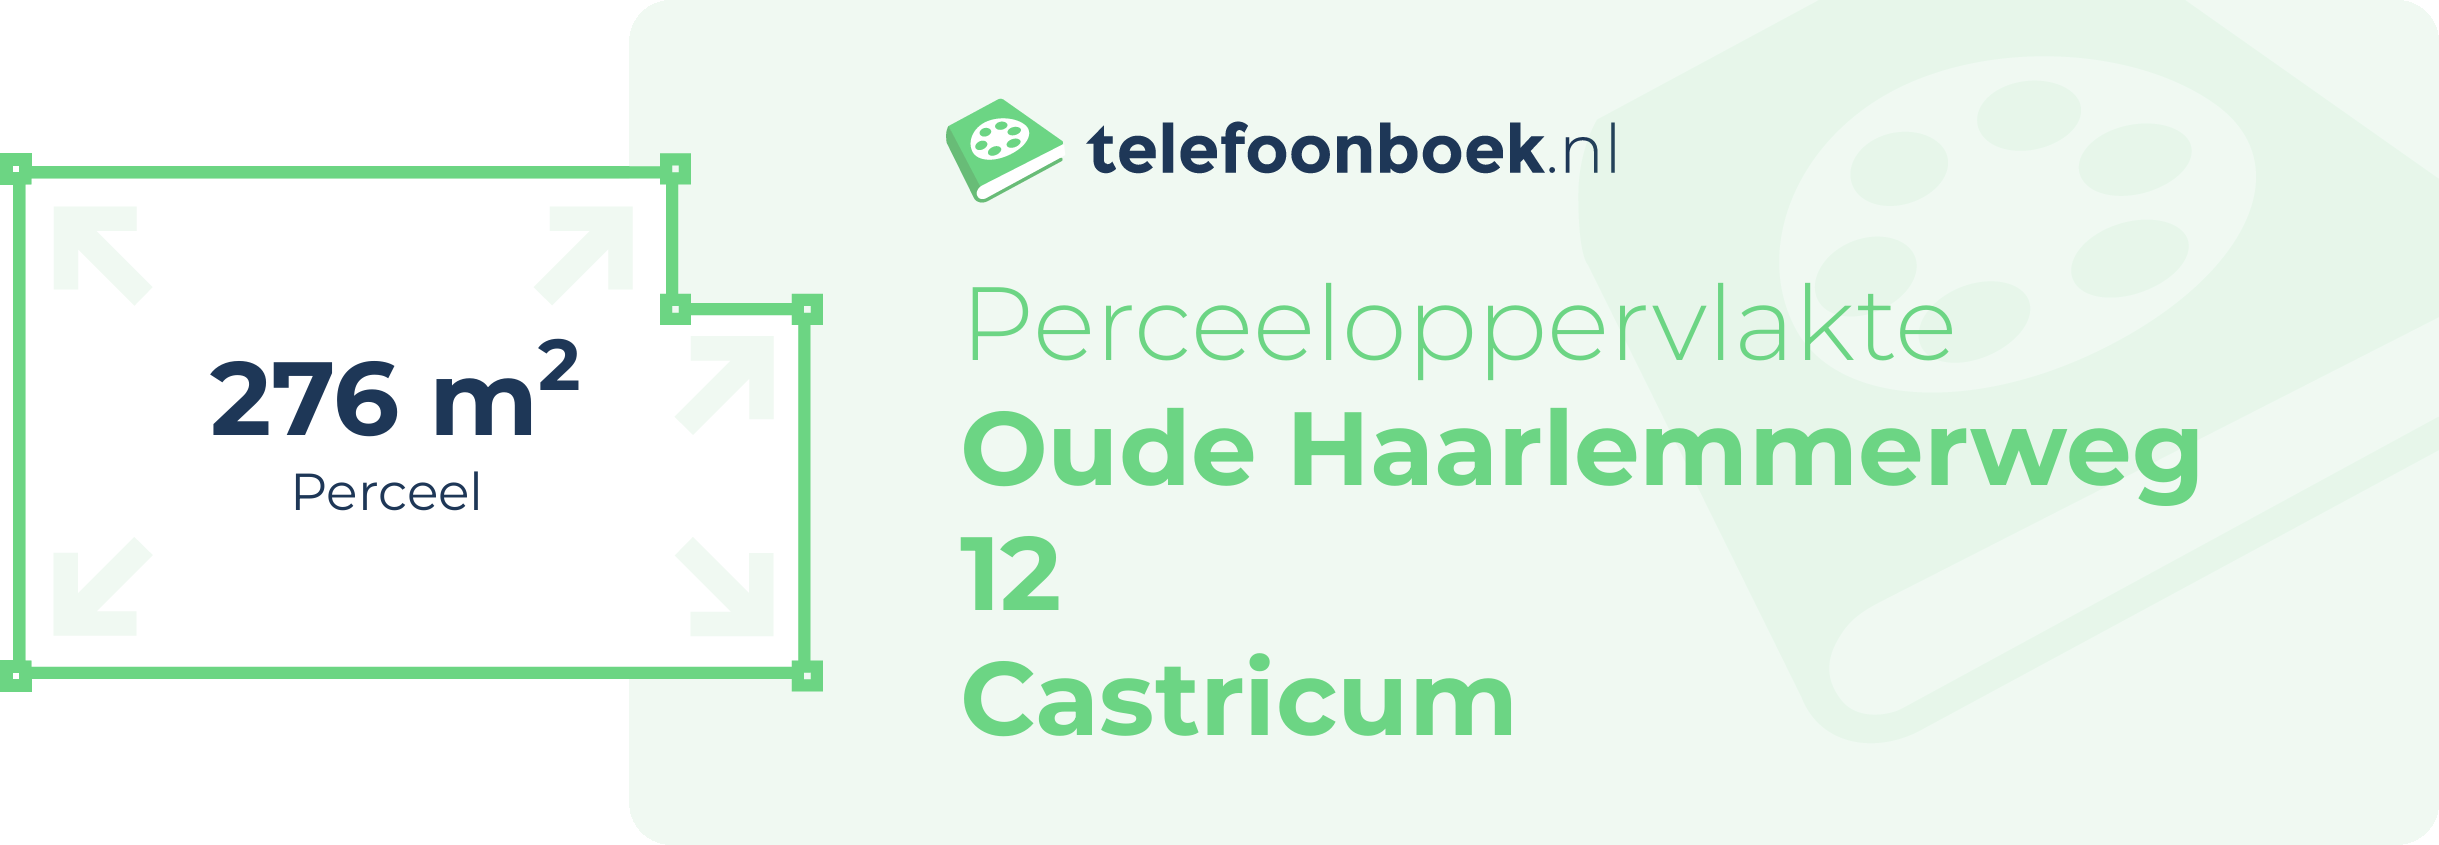 Perceeloppervlakte Oude Haarlemmerweg 12 Castricum